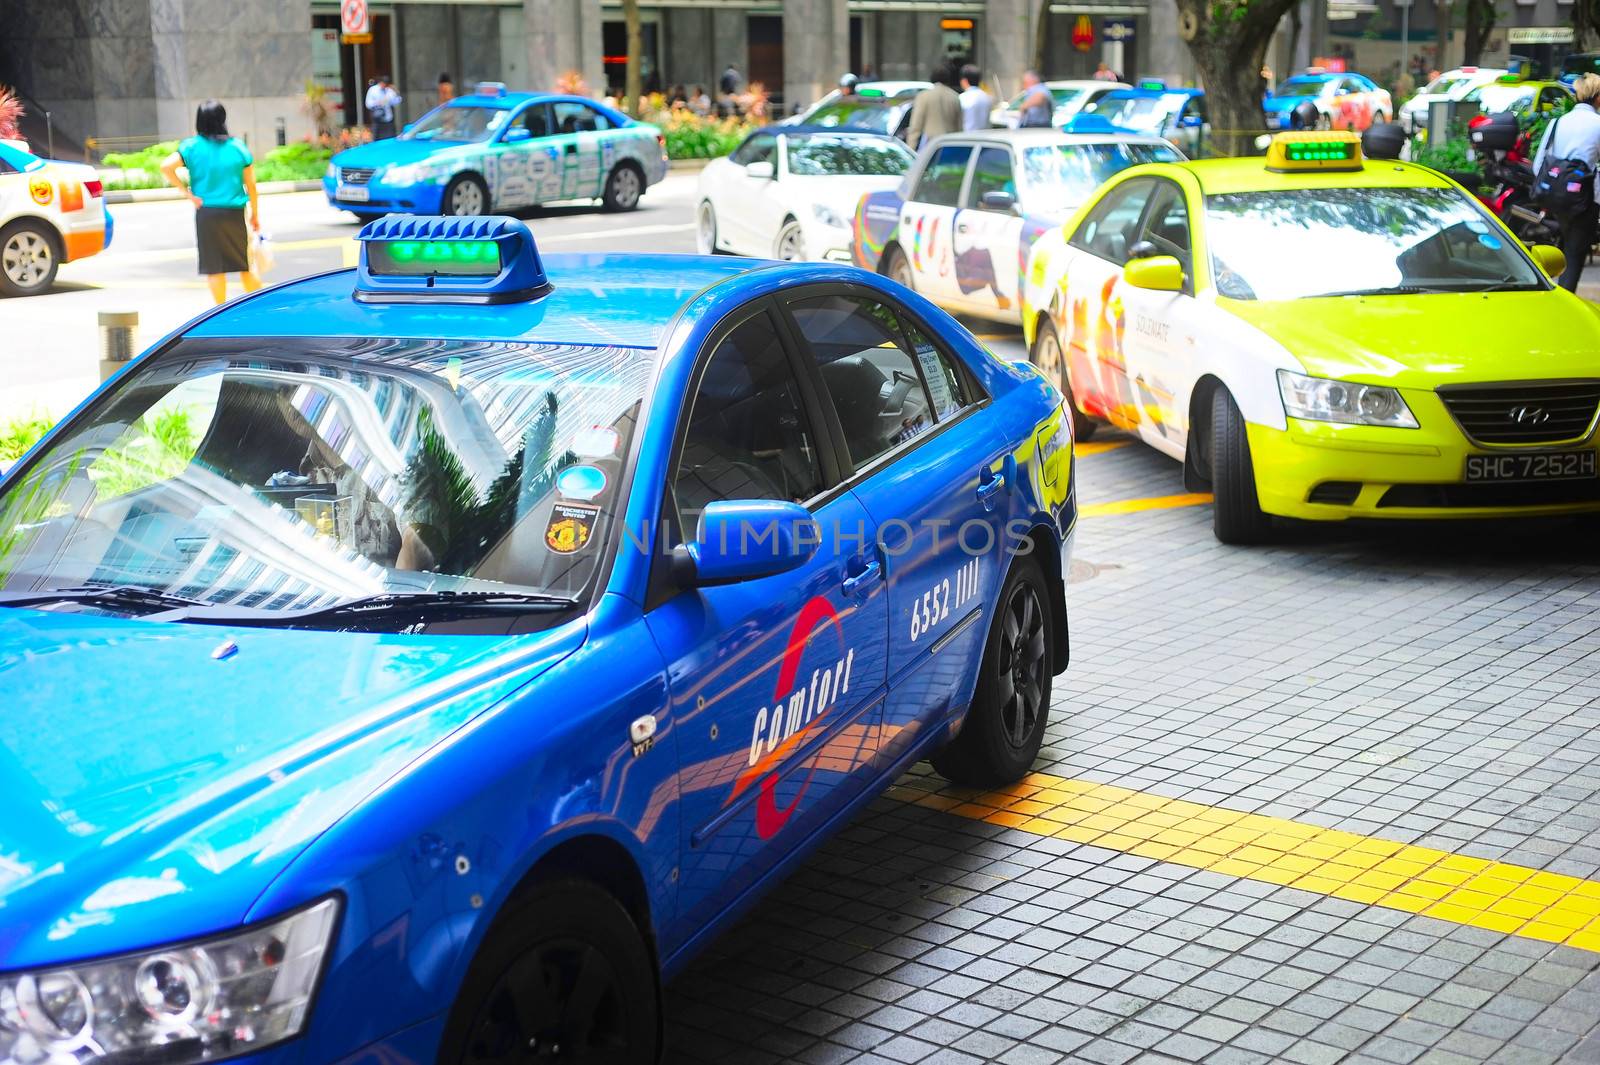 Singapore Taxi cab by joyfull